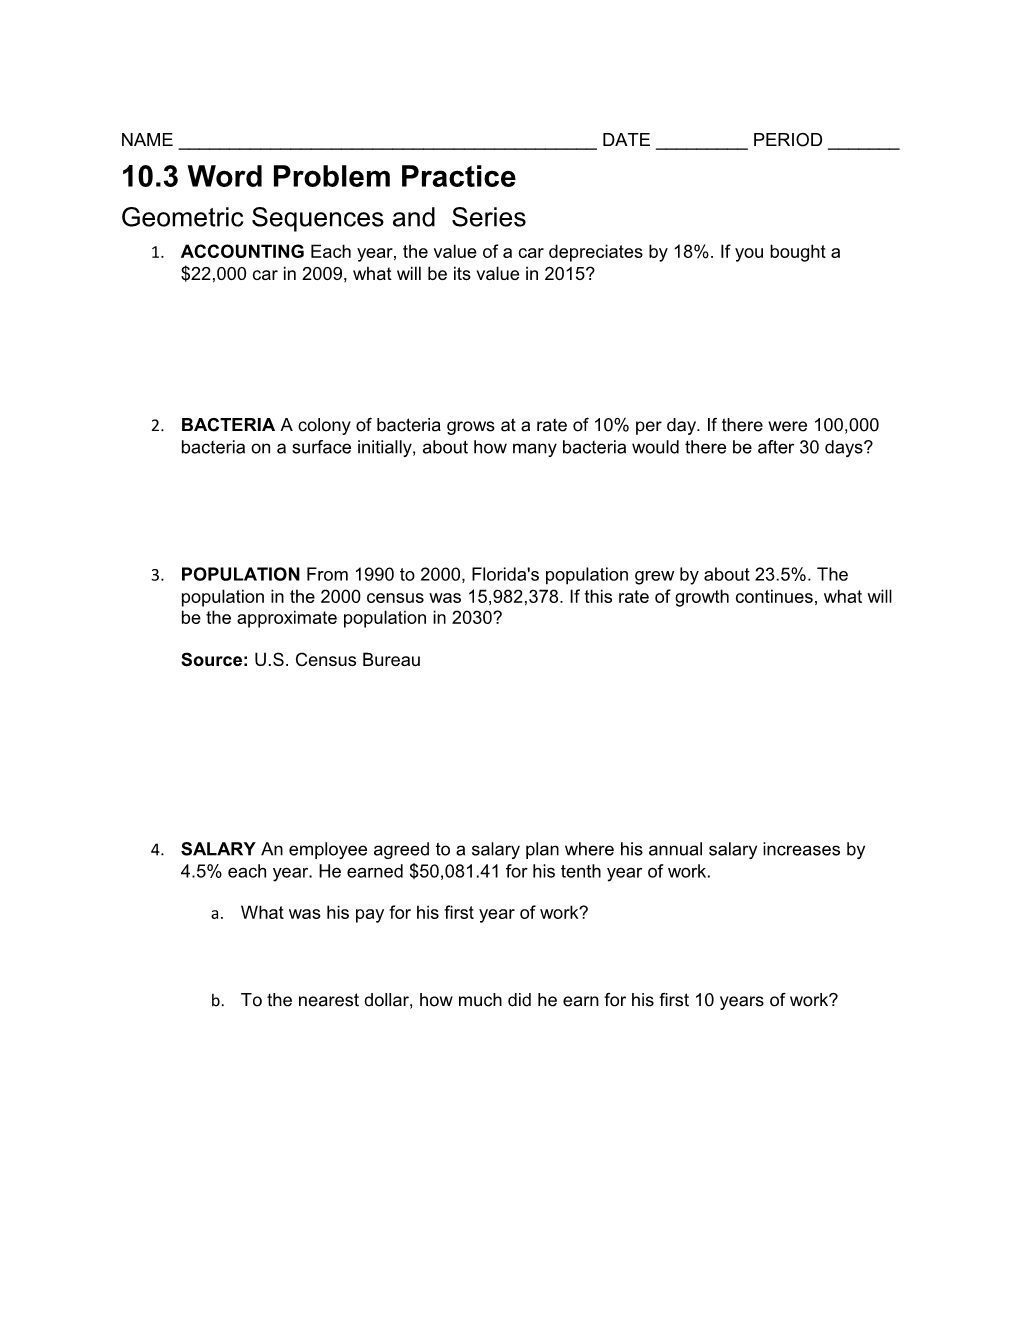 10.3 Word Problem Practice